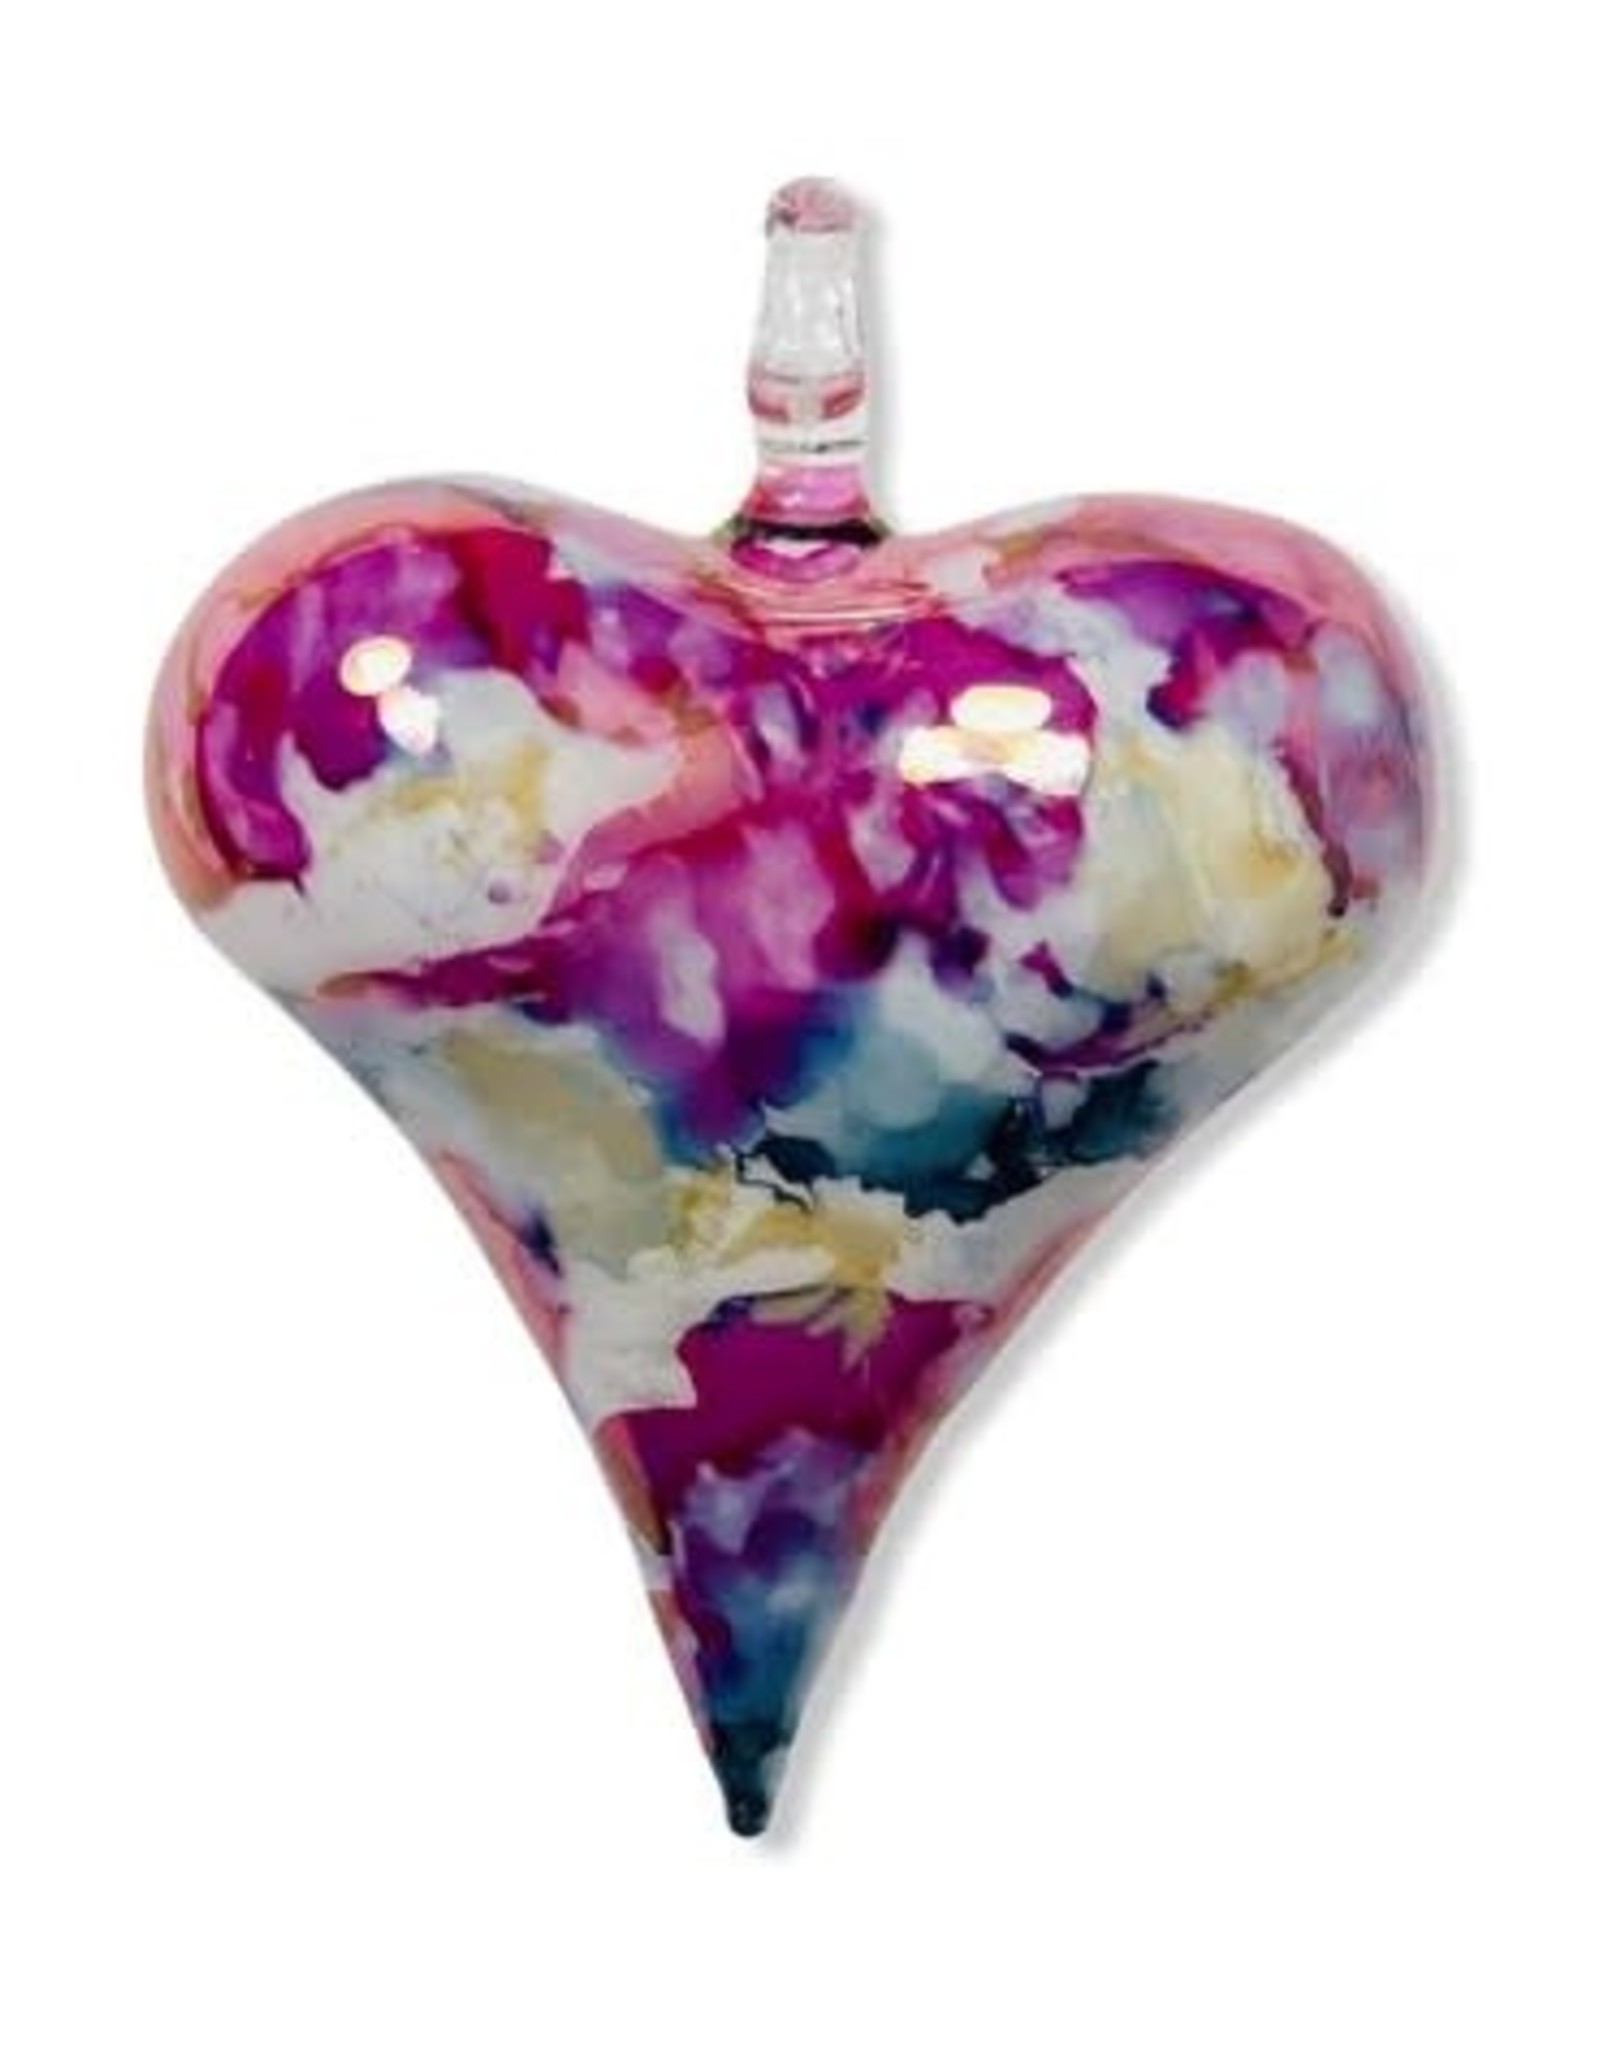 Dandarah Ornament Blown Glass Heart Multi/Fuchsia - Egypt